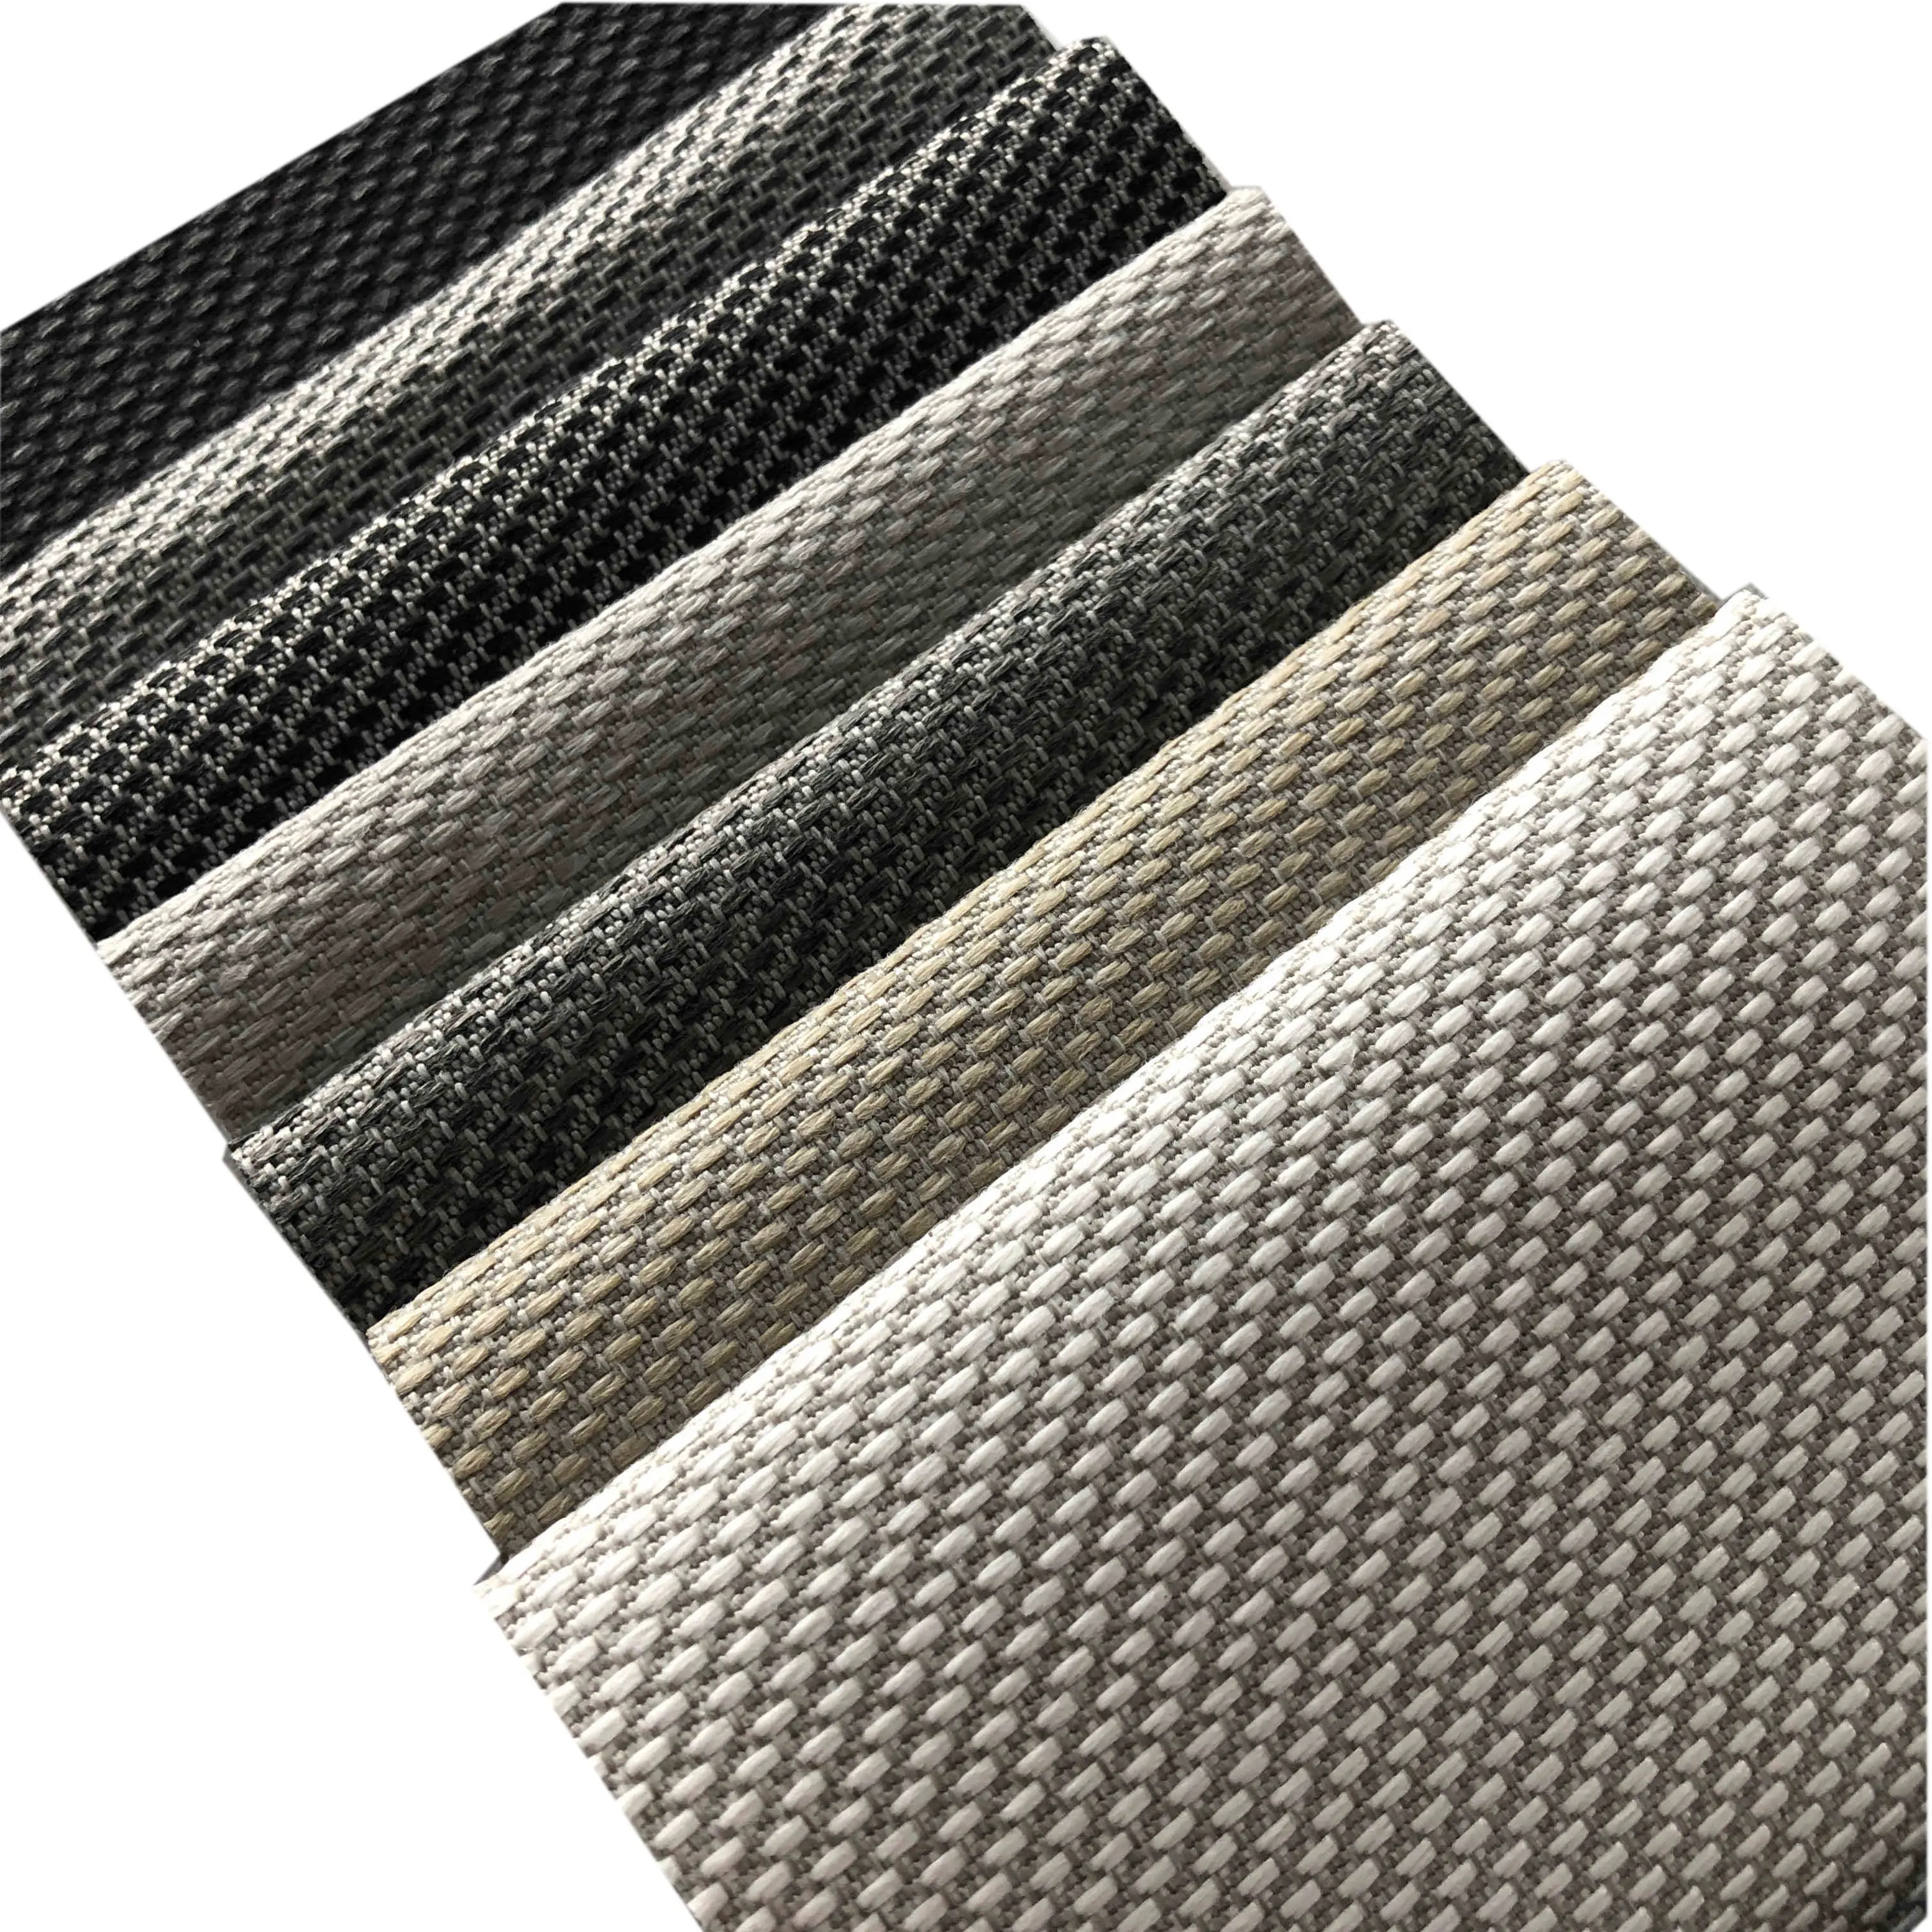 Langsum # materiale per la casa in tessuto impermeabile per esterni per cuscino per sedia da divano tappetino impermeabile per esterni